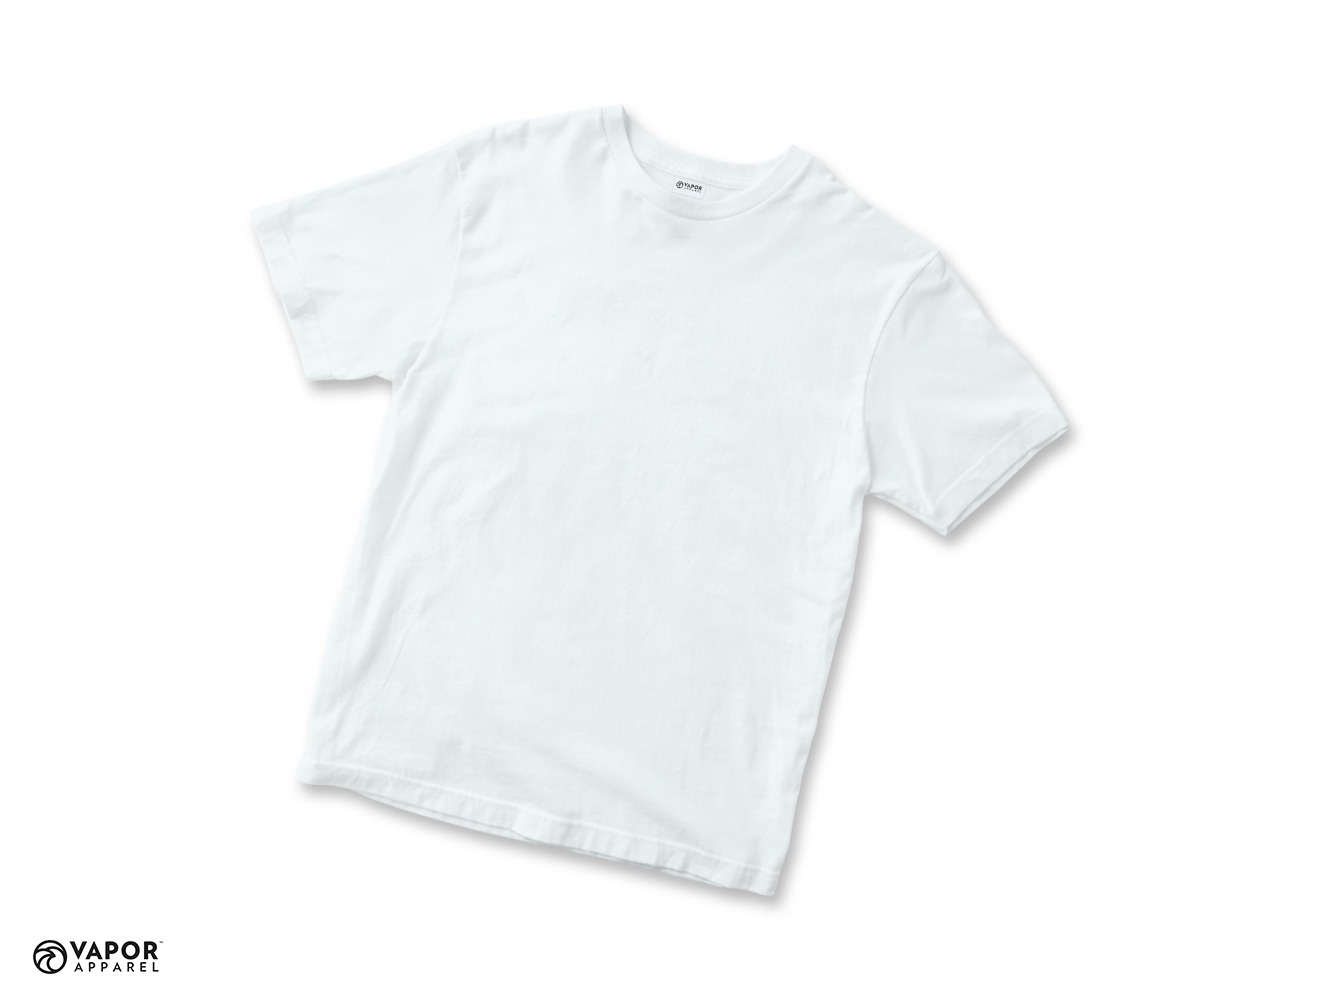 Vapor Sublimation T-Shirt for Adults size M - White